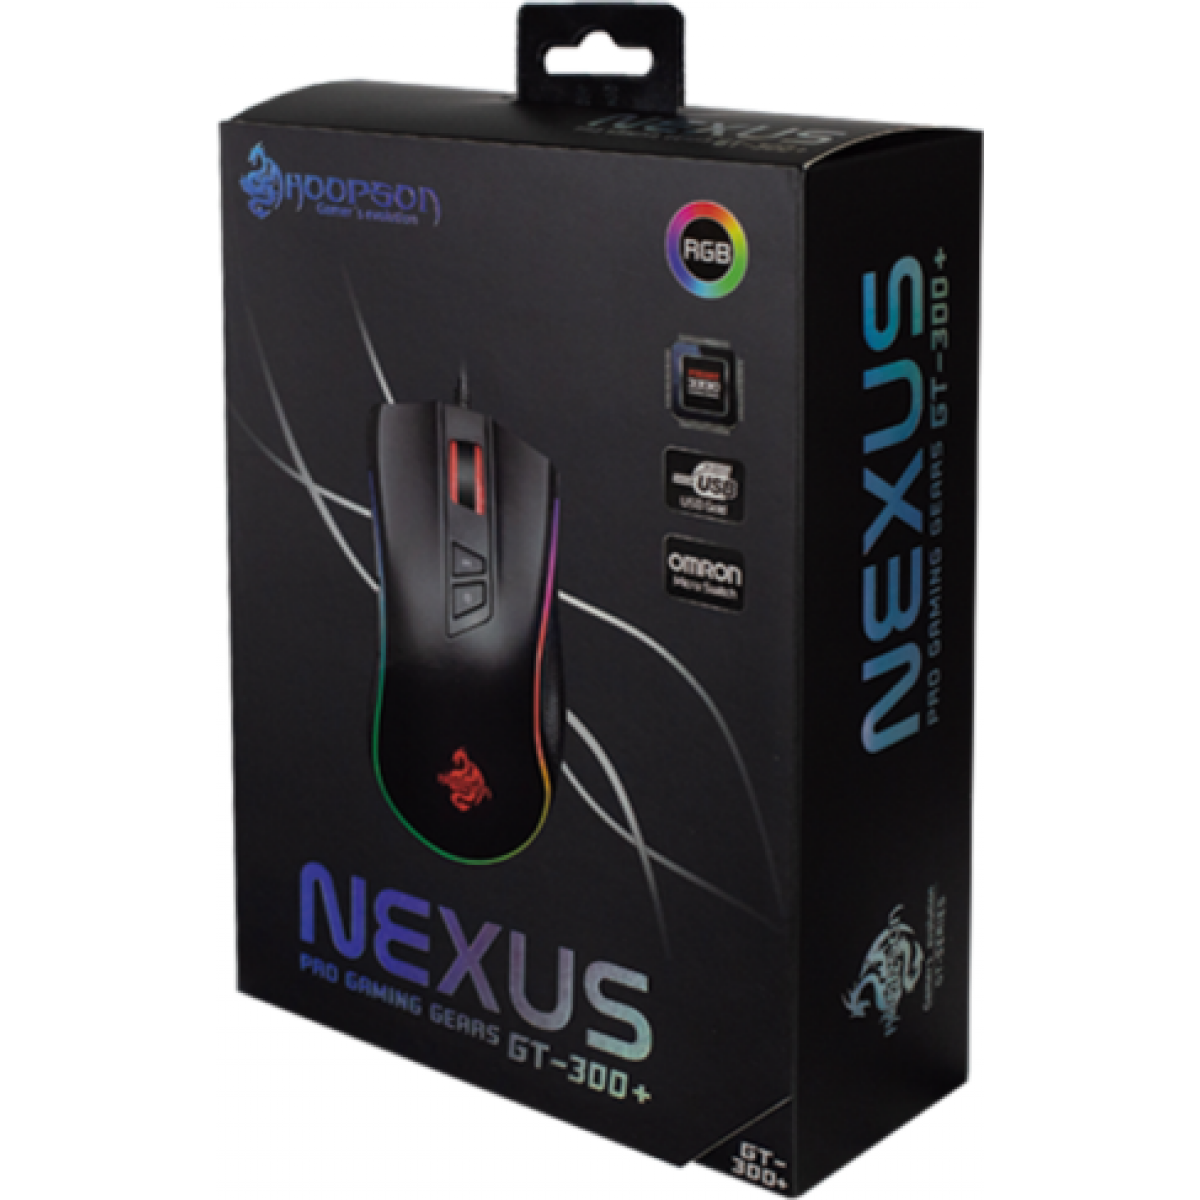 Mouse Gamer Hoopson Nexus RGB, 7200 DPI, 9 Botões, Black, GT300+